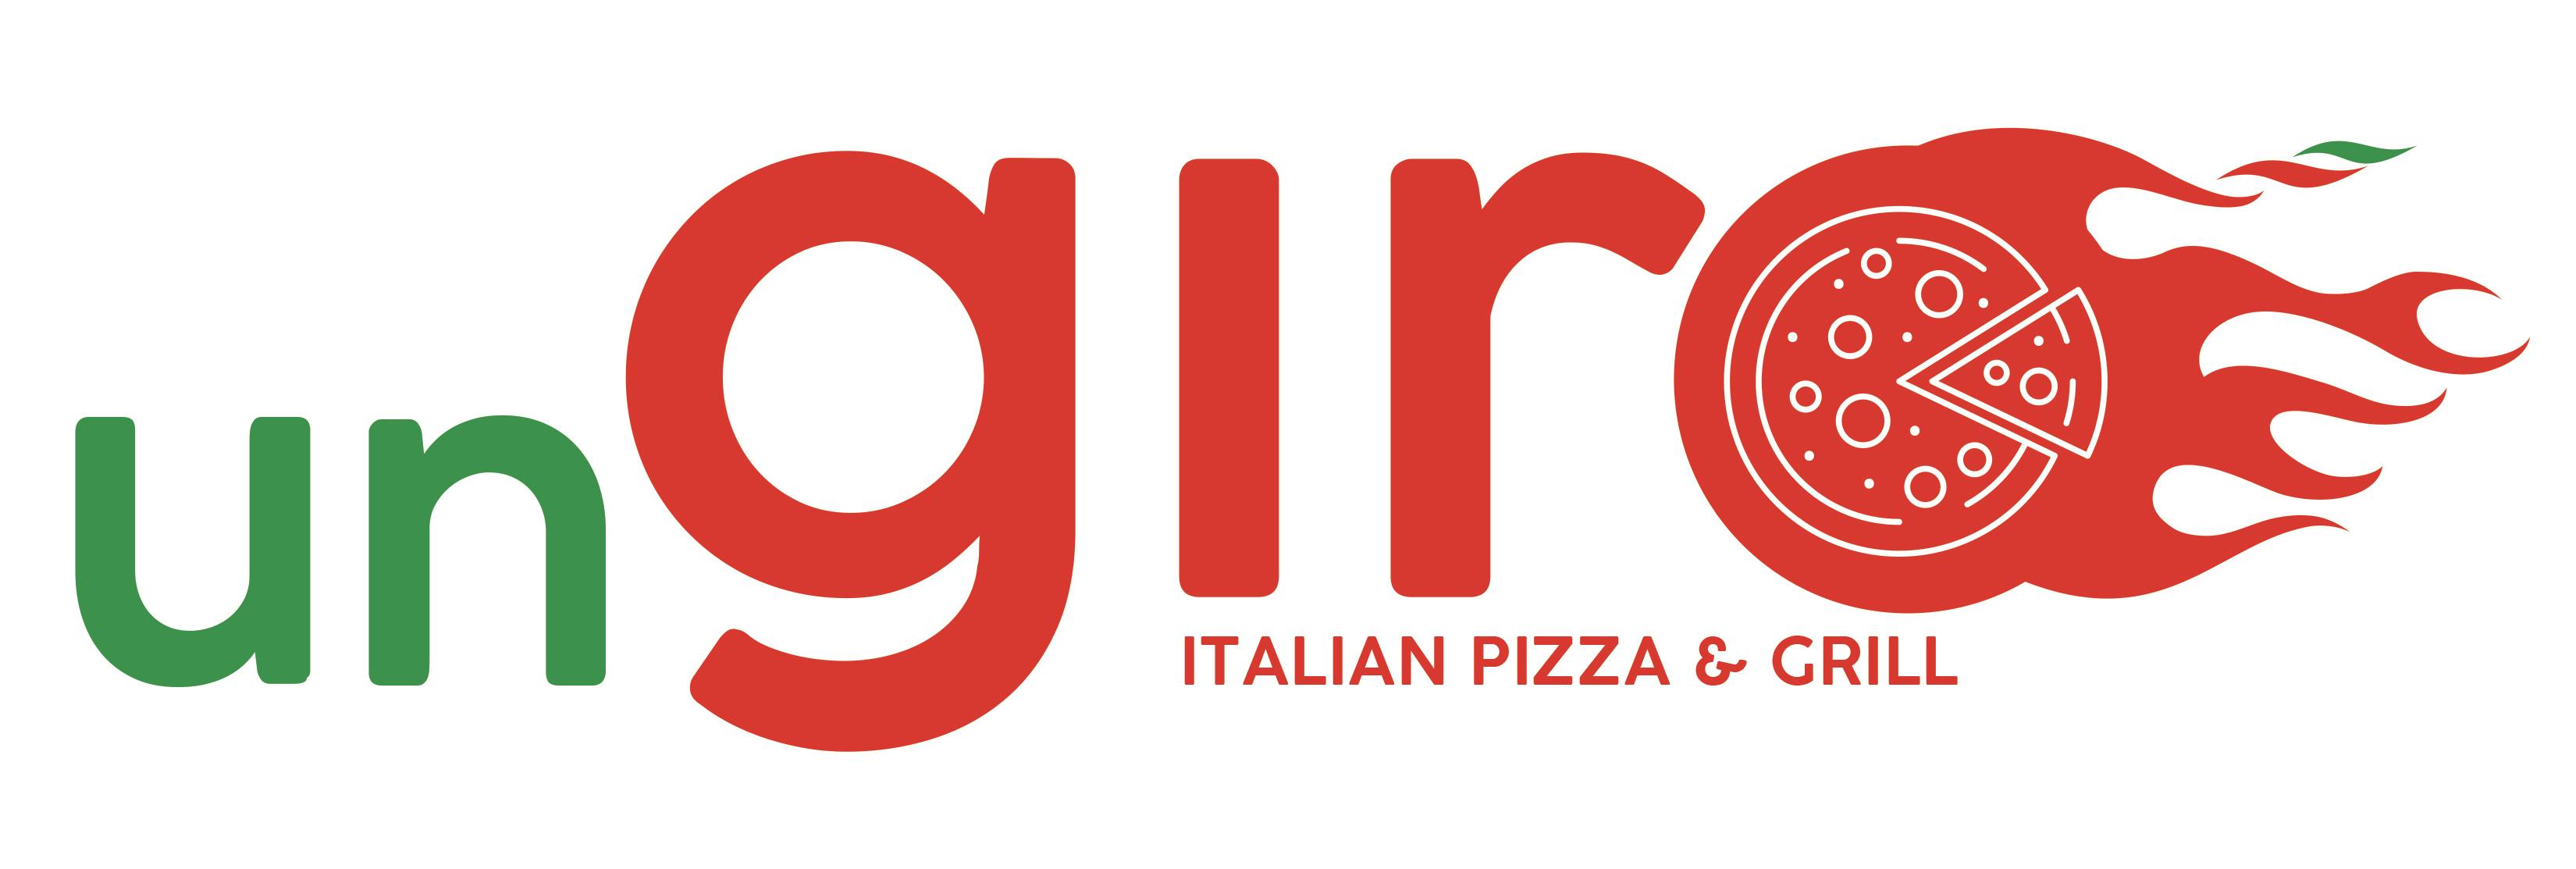 Italian Pizza & Grill Logo